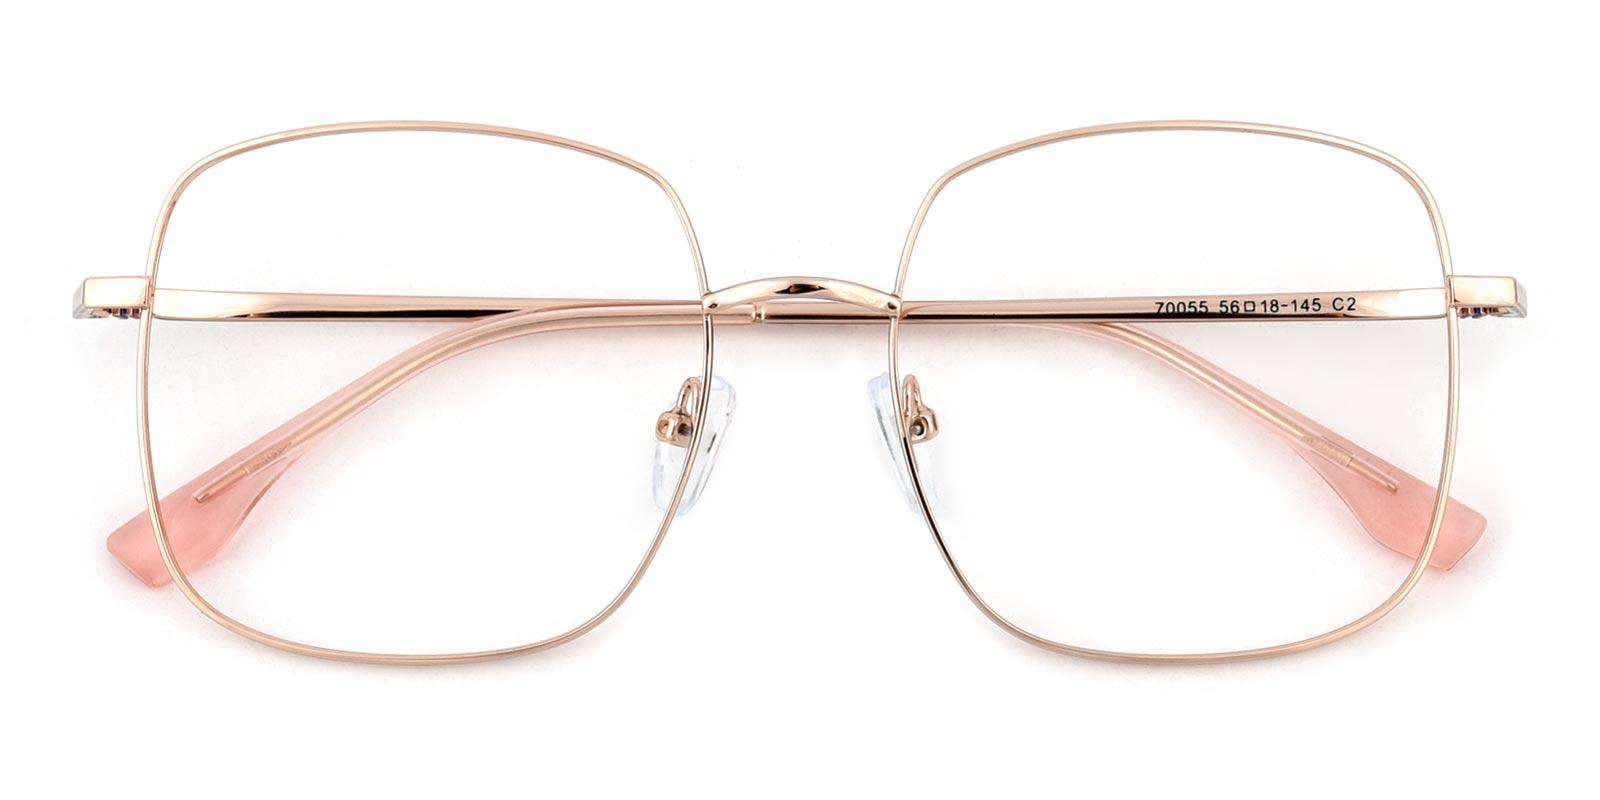 Gussie-Gold-Square-Metal-Eyeglasses-detail